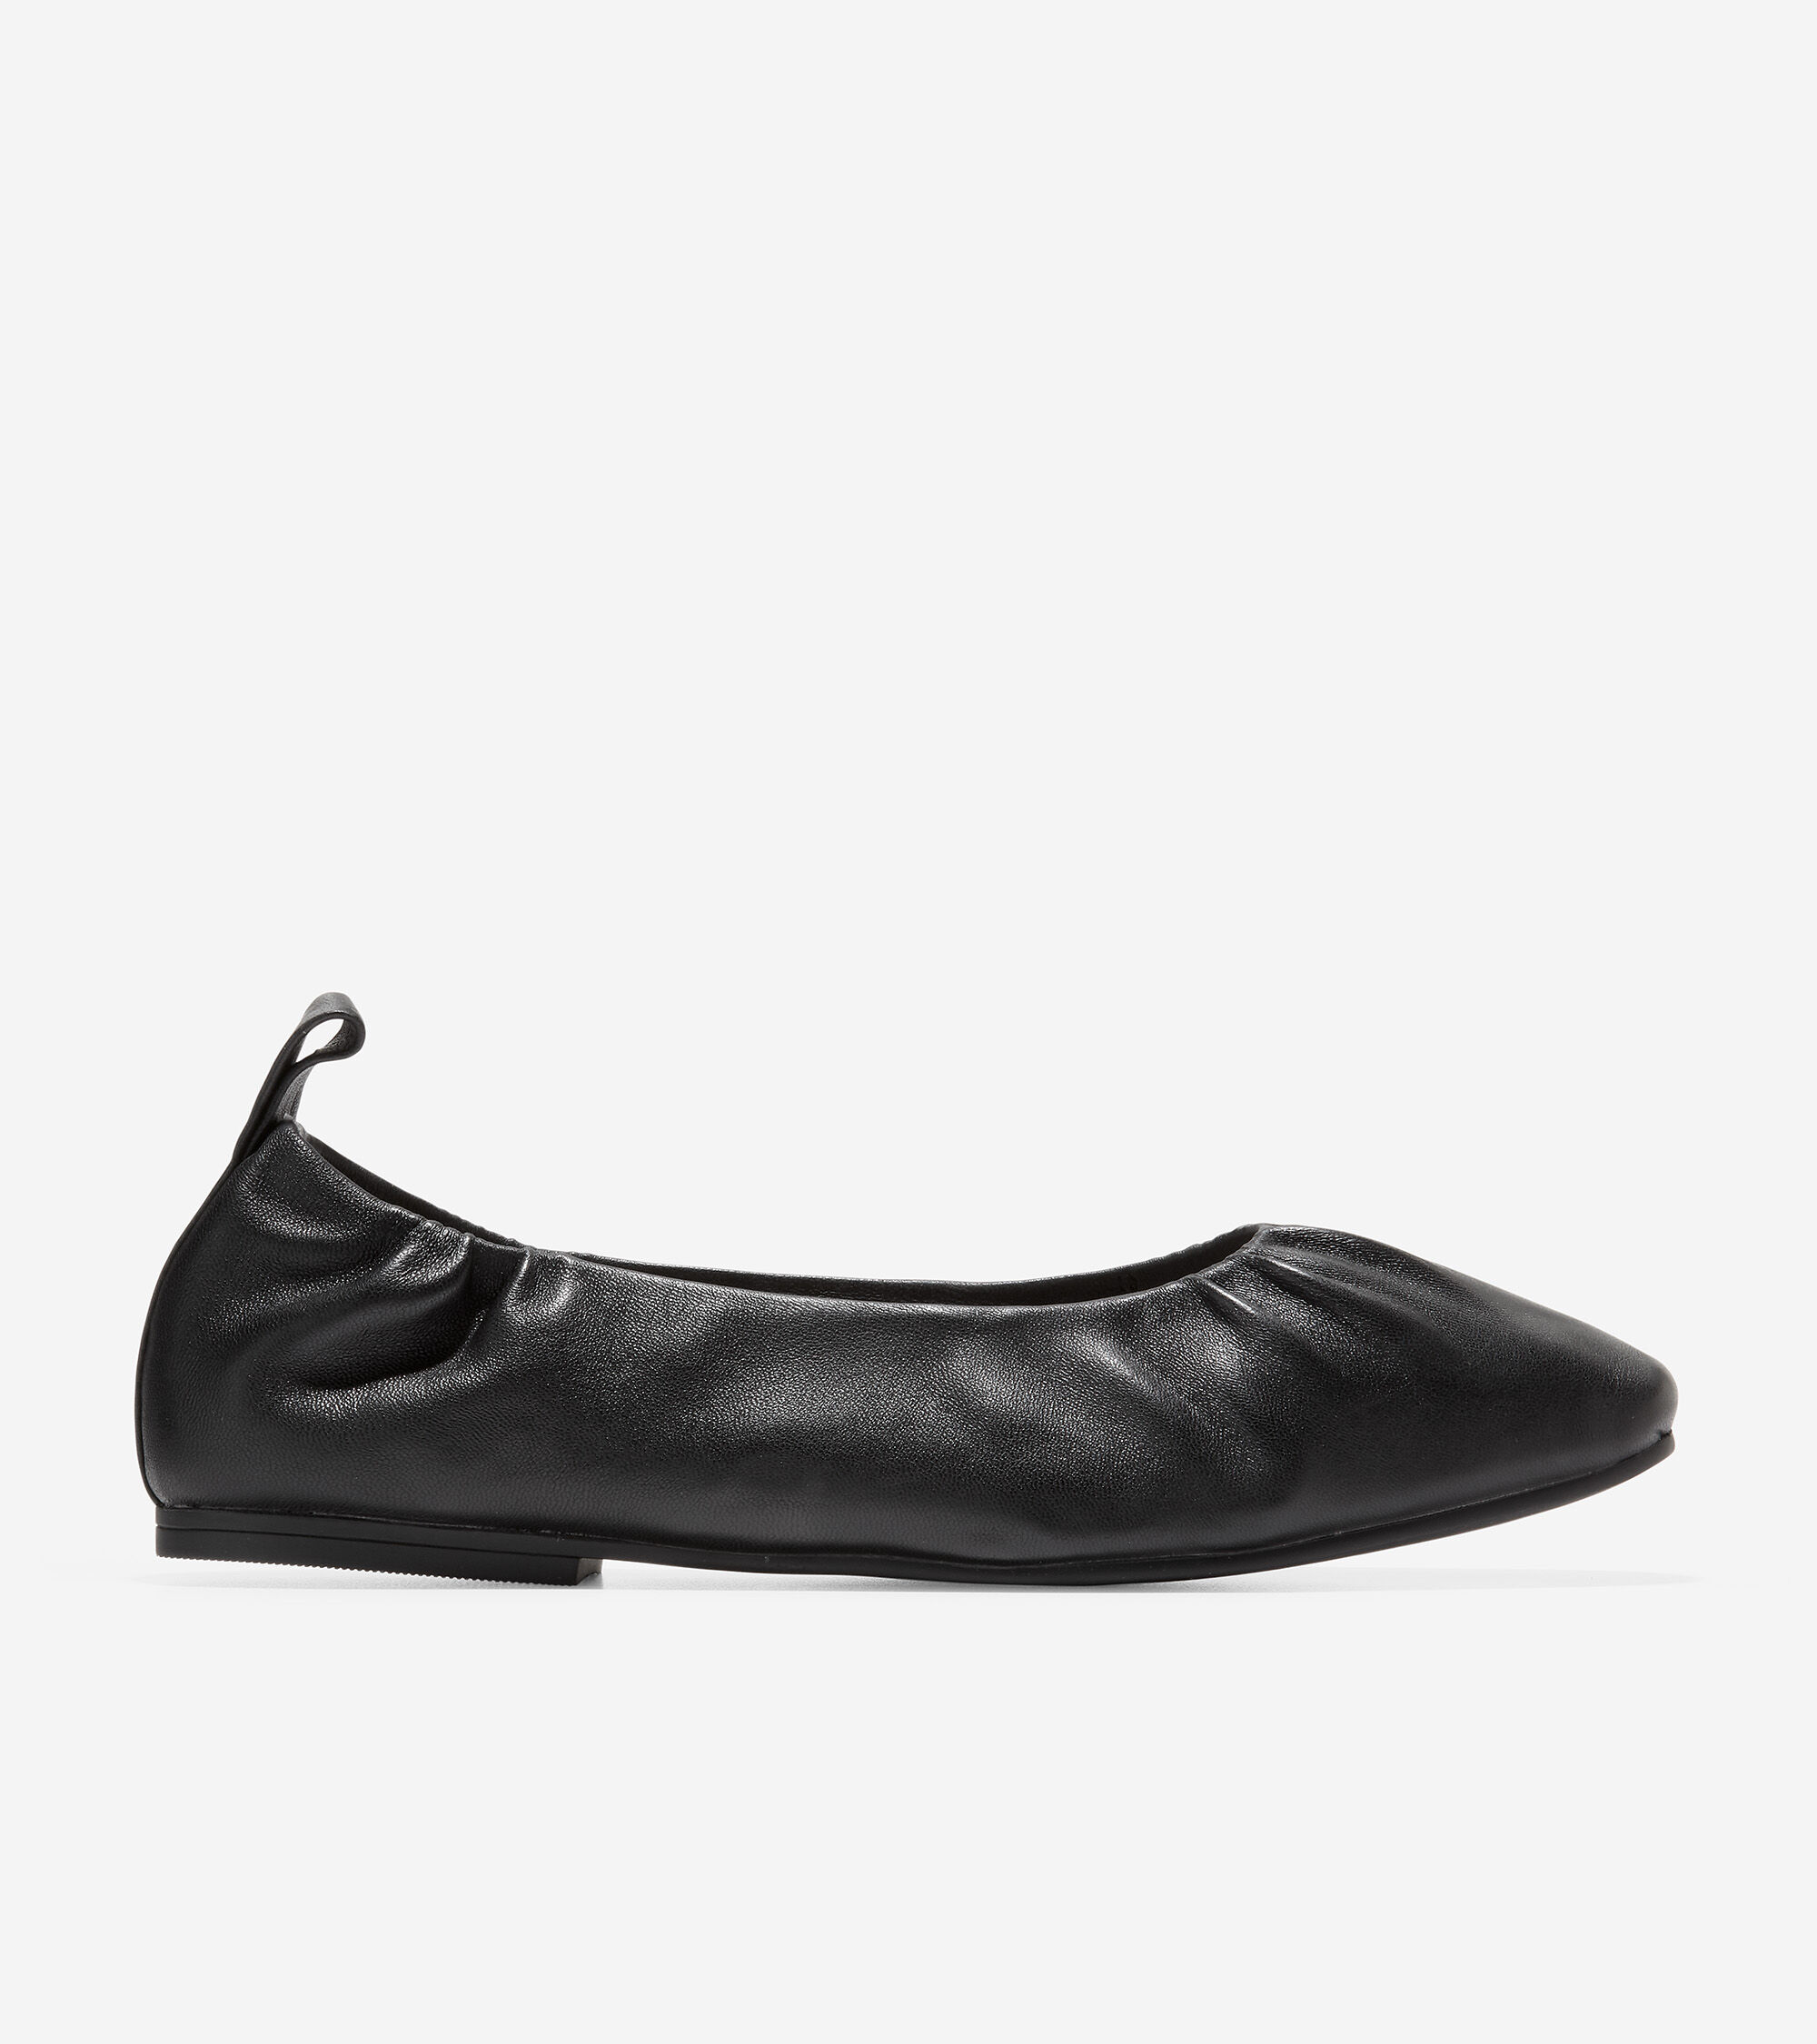 Cole Haan Point Toe Leather Leopard Flats 6.5 NWOT Schoenen damesschoenen Instappers Balletschoenen 